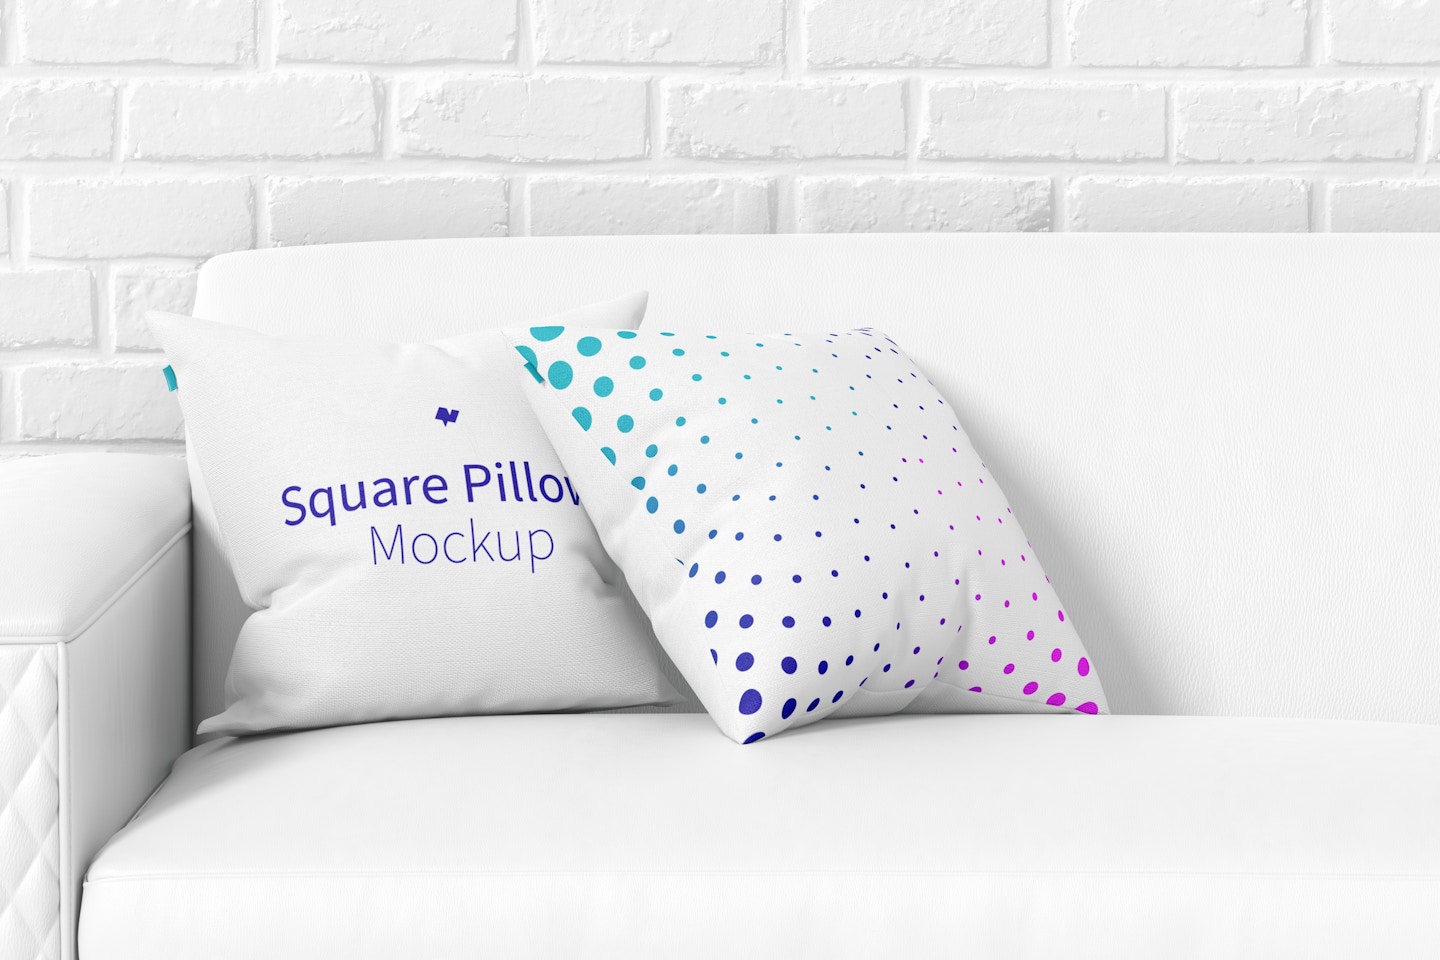 Square Pillows on the Sofa Mockup